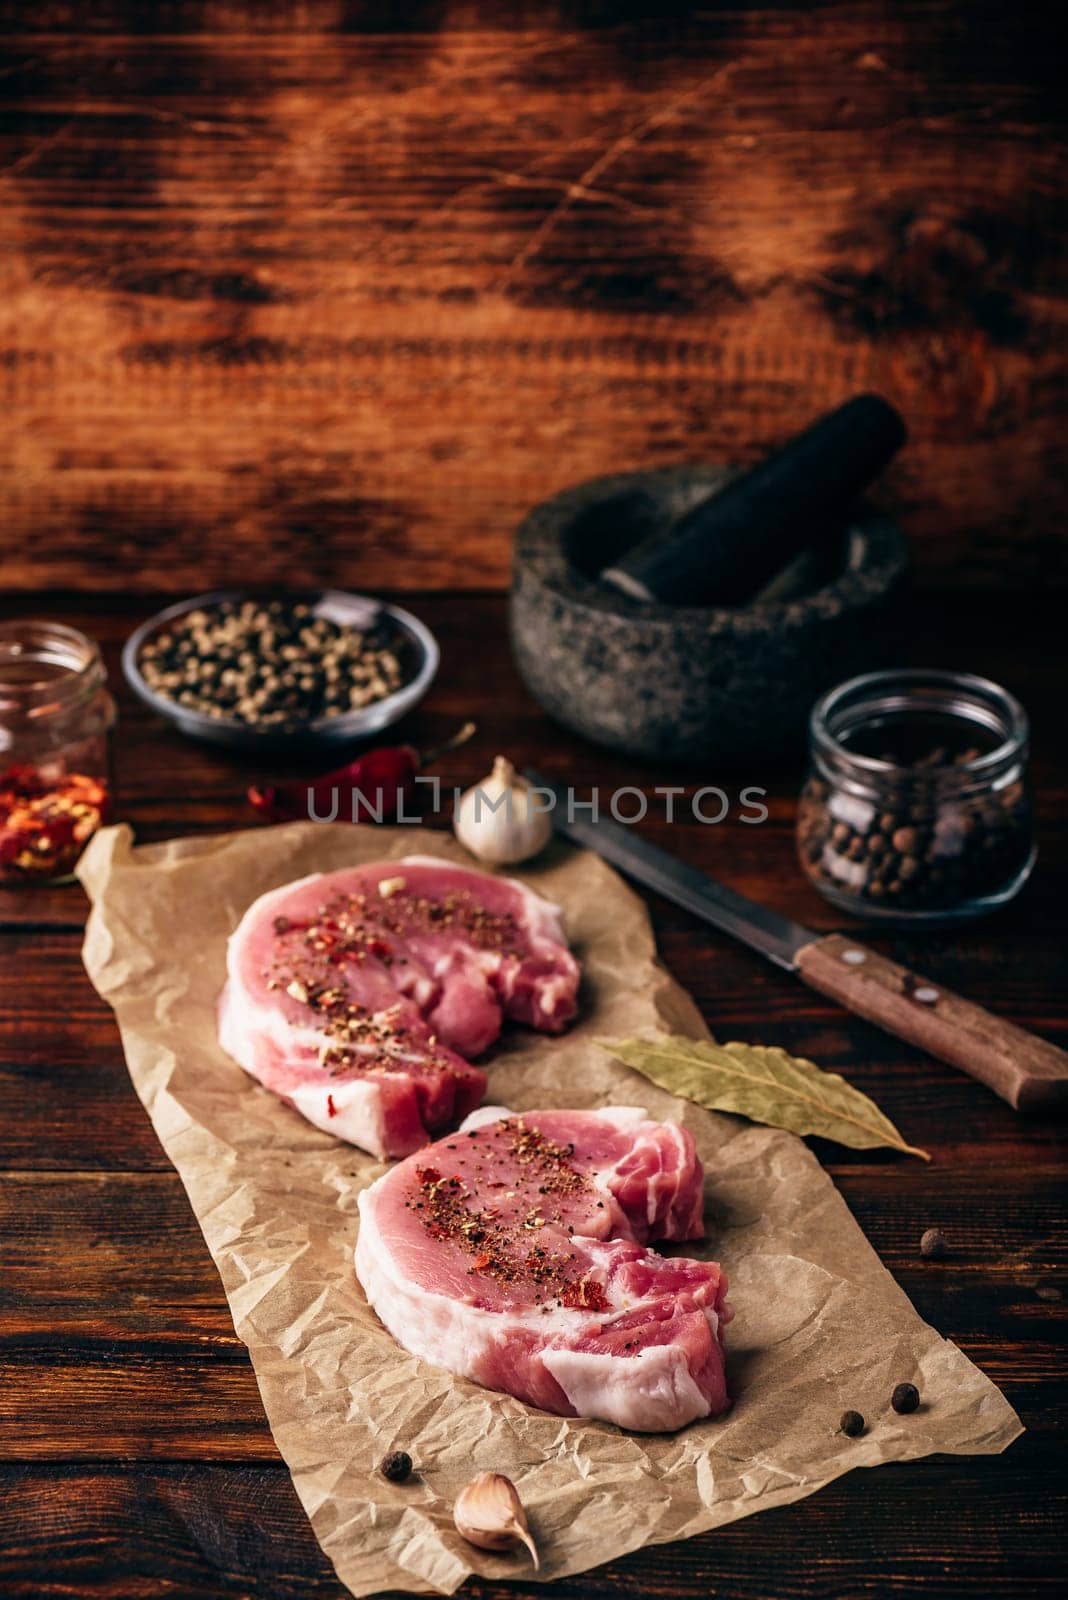 Pork loin steaks with ground spices by Seva_blsv